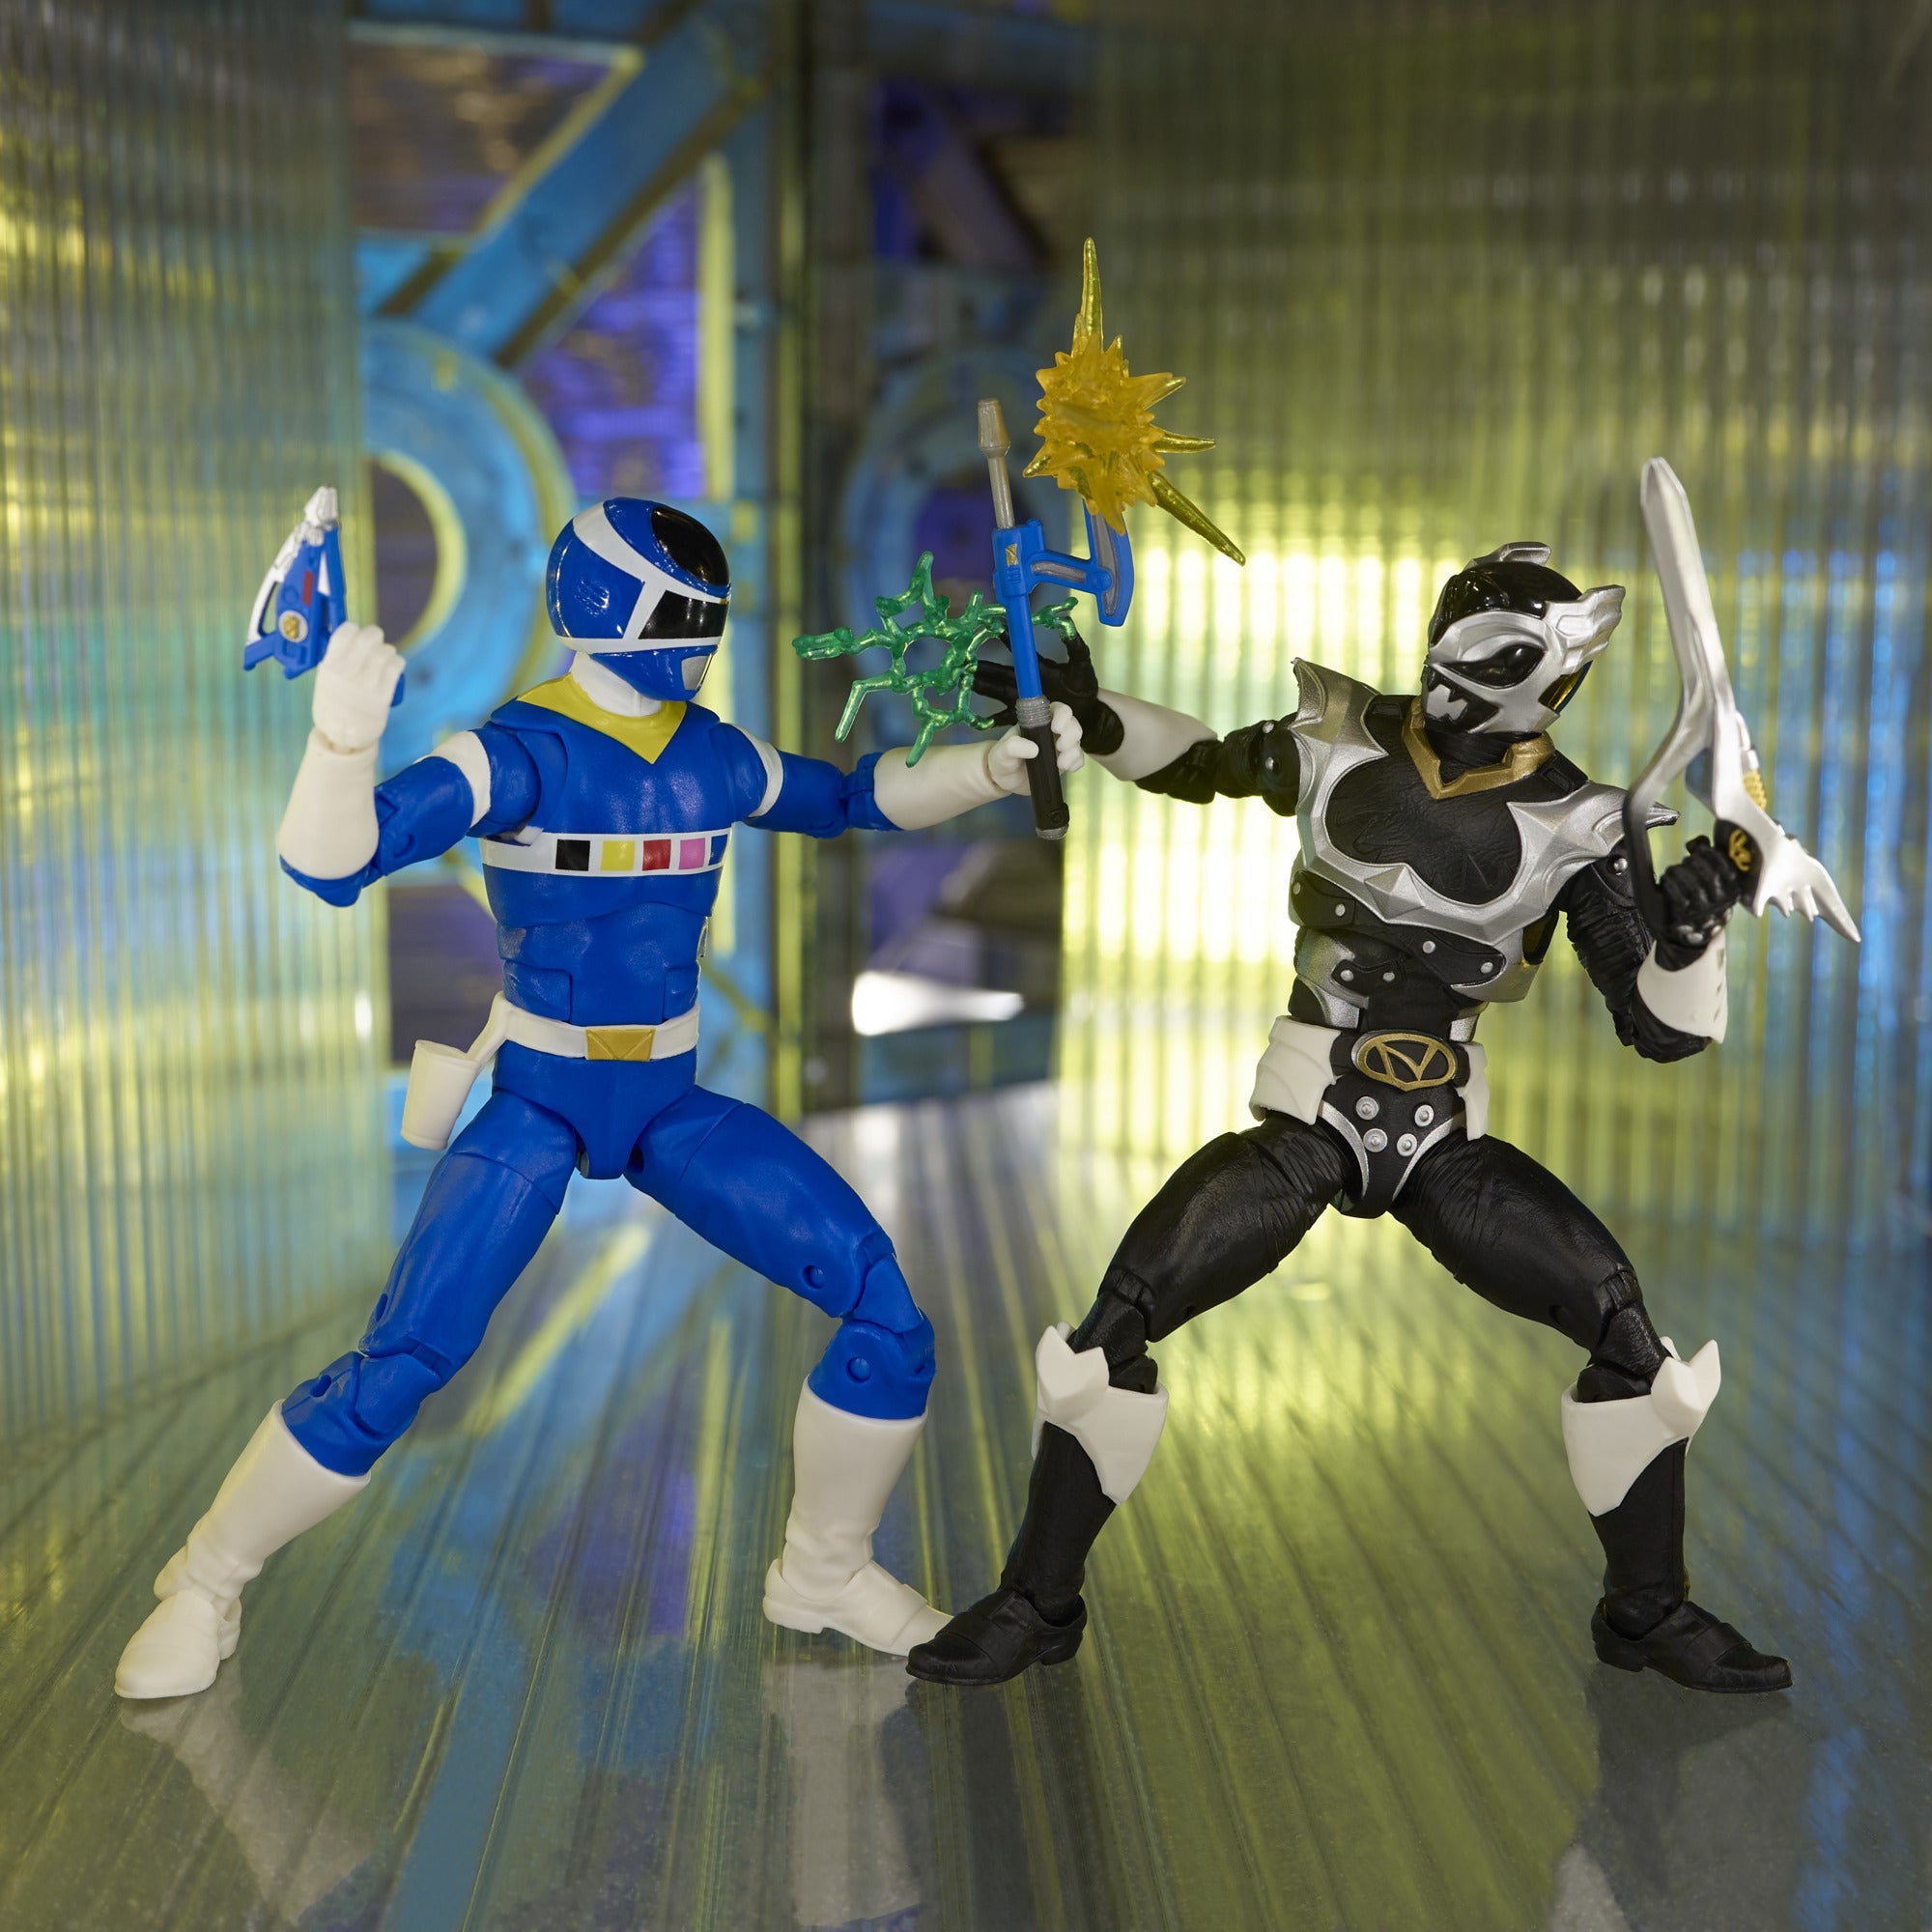 Hasbro Pulse Power Rangers Lightning Collection In Space Blue Ranger Vs ...